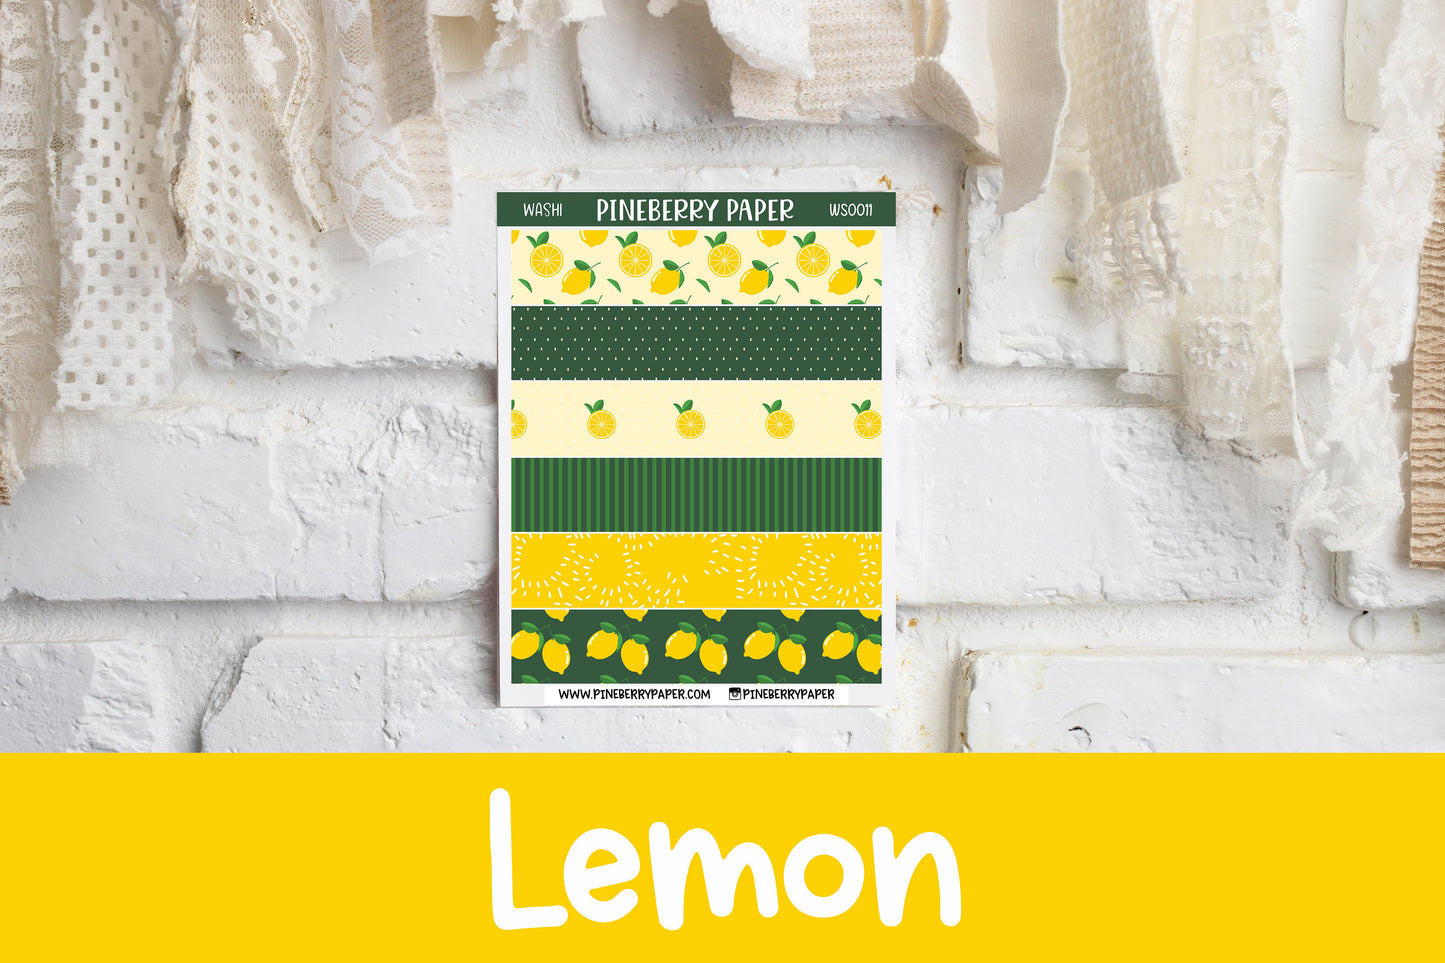 Fruit Washi Strip Stickers | Cherry | Banana | Lemon | Orange | Strawberry